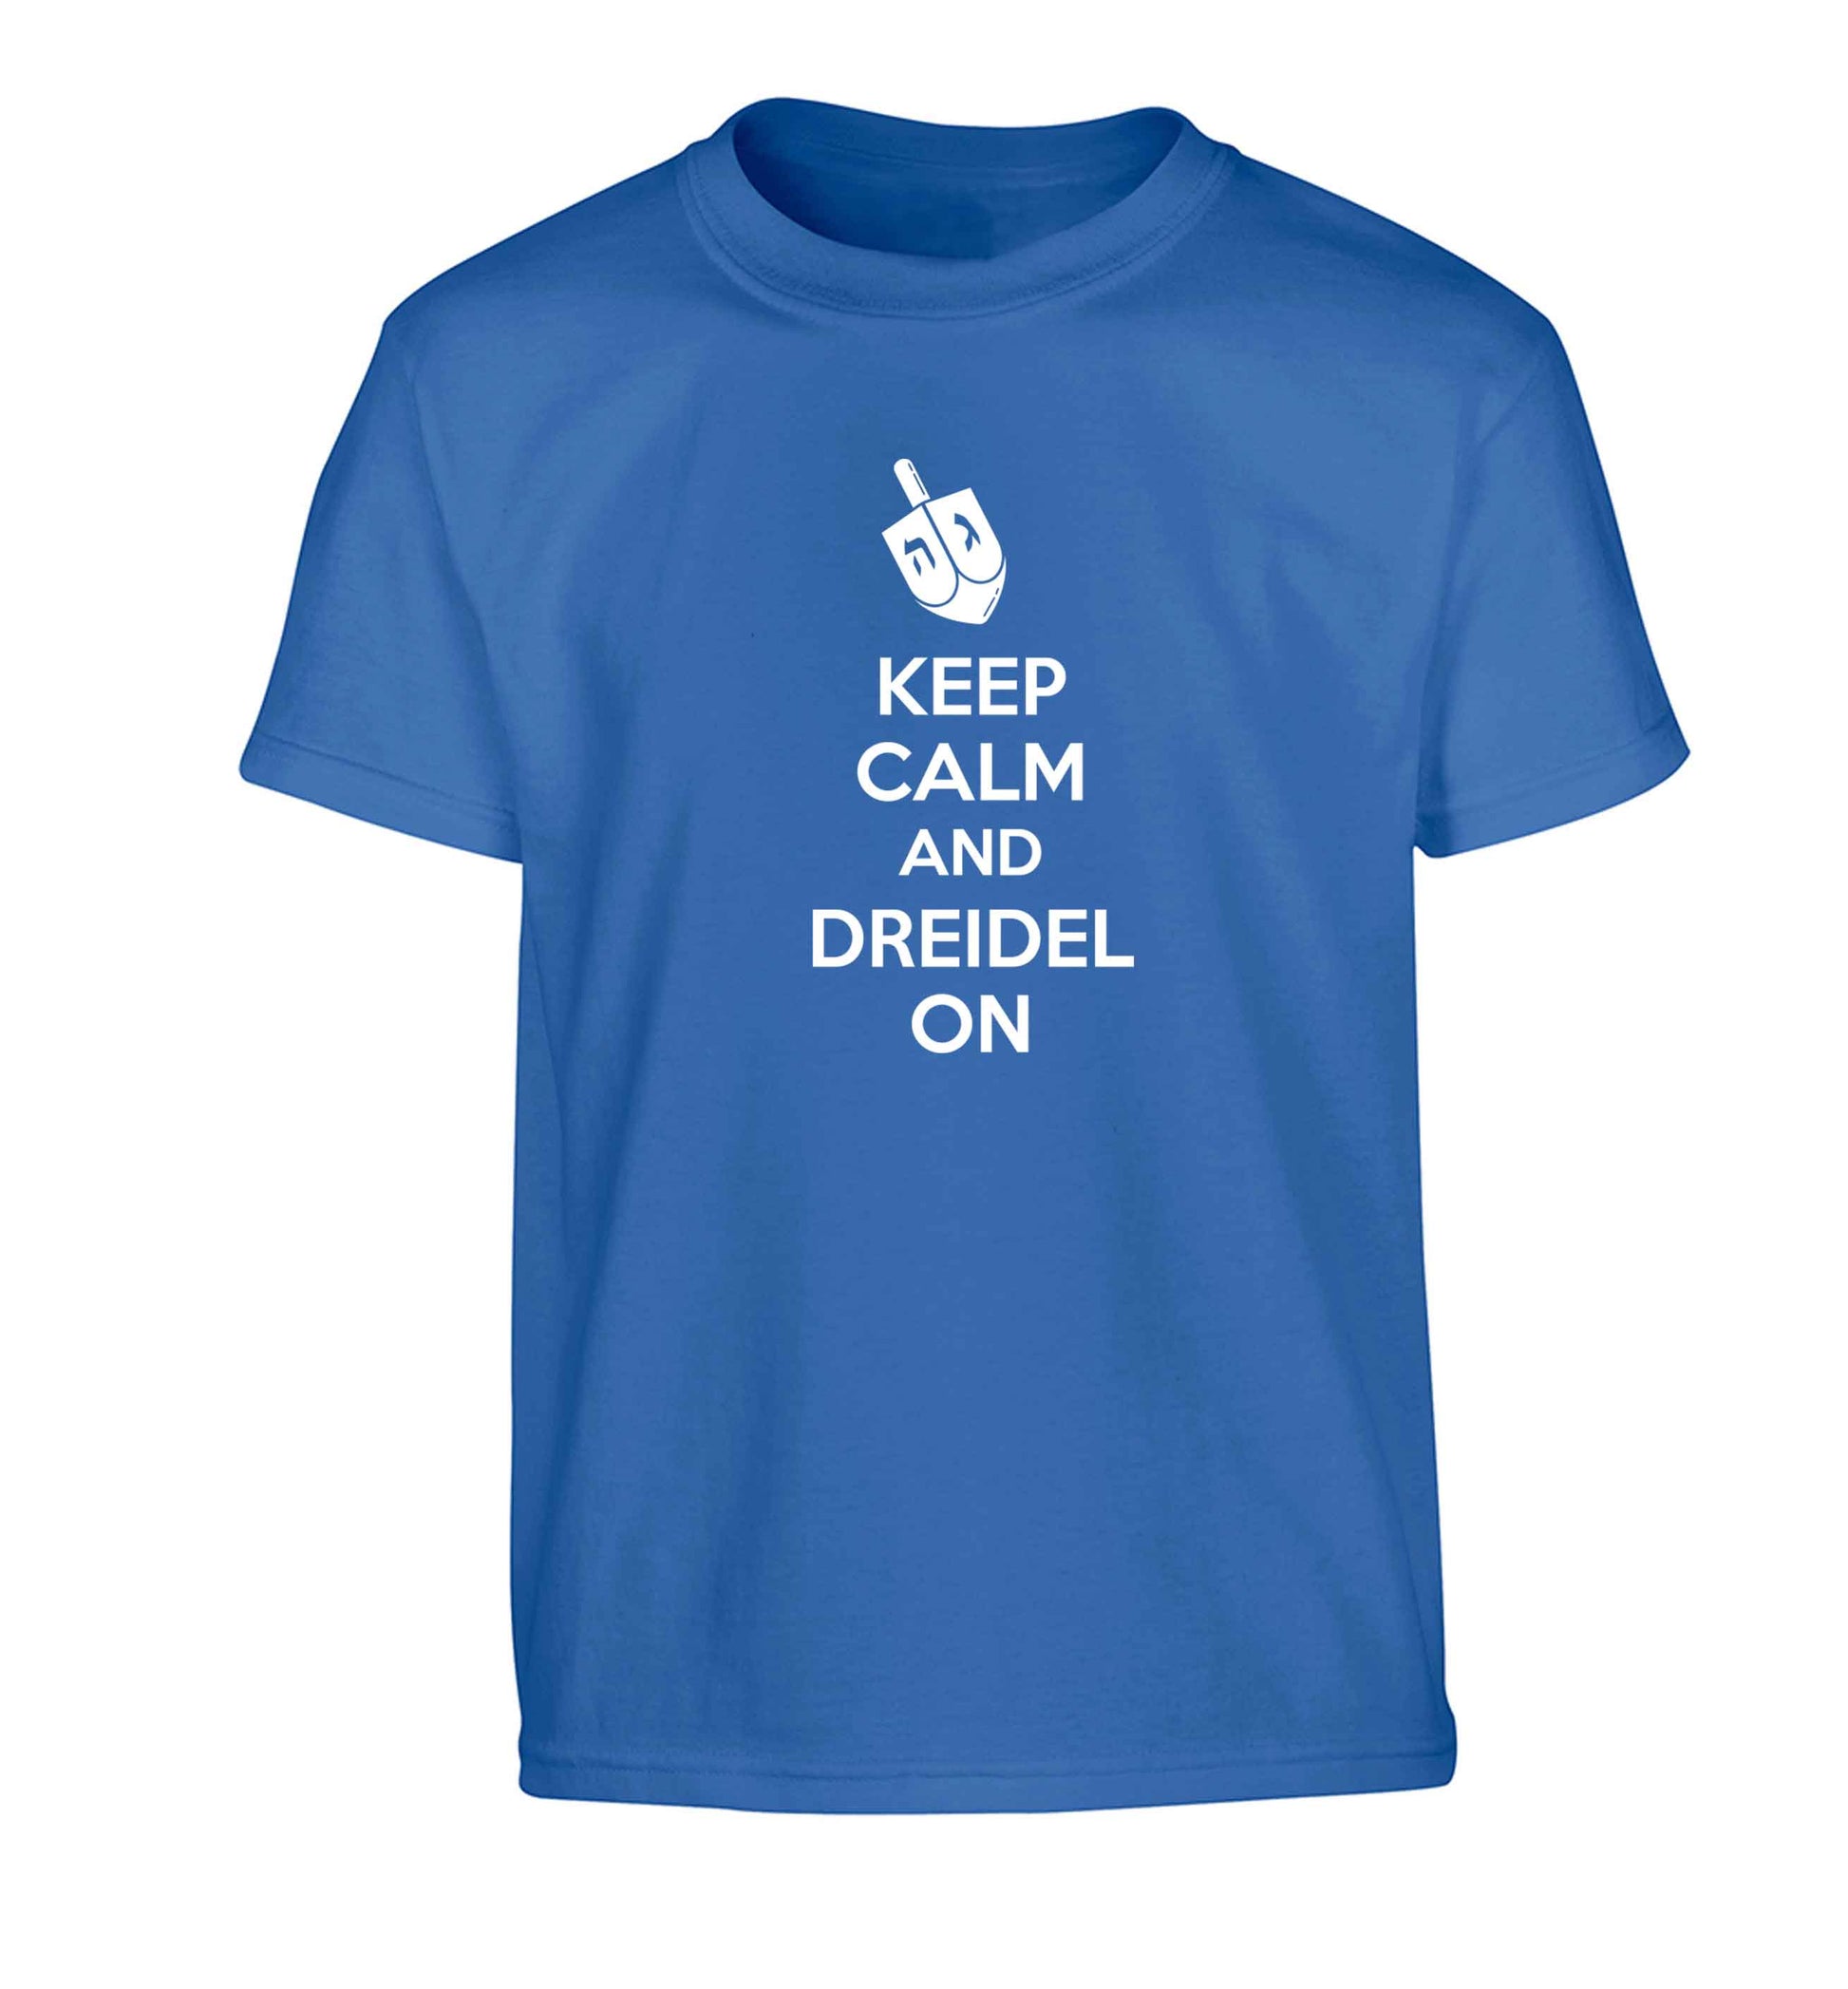 Keep calm and dreidel on Children's blue Tshirt 12-13 Years